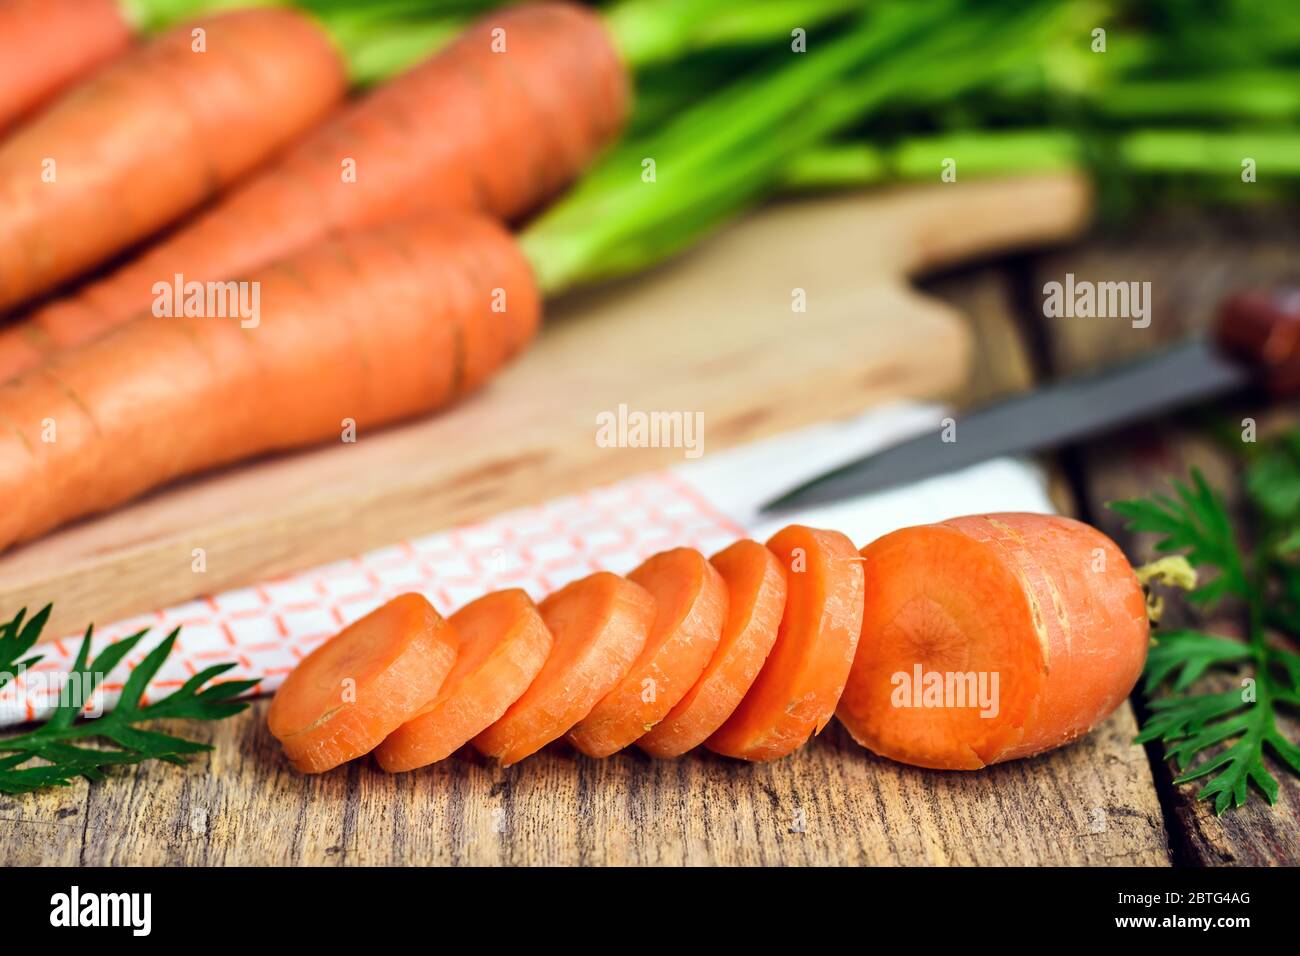 https://c8.alamy.com/comp/2BTG4AG/fresh-sliced-carrots-on-a-wooden-blackboard-with-knife-dish-cloth-and-cutting-board-selective-focus-2BTG4AG.jpg